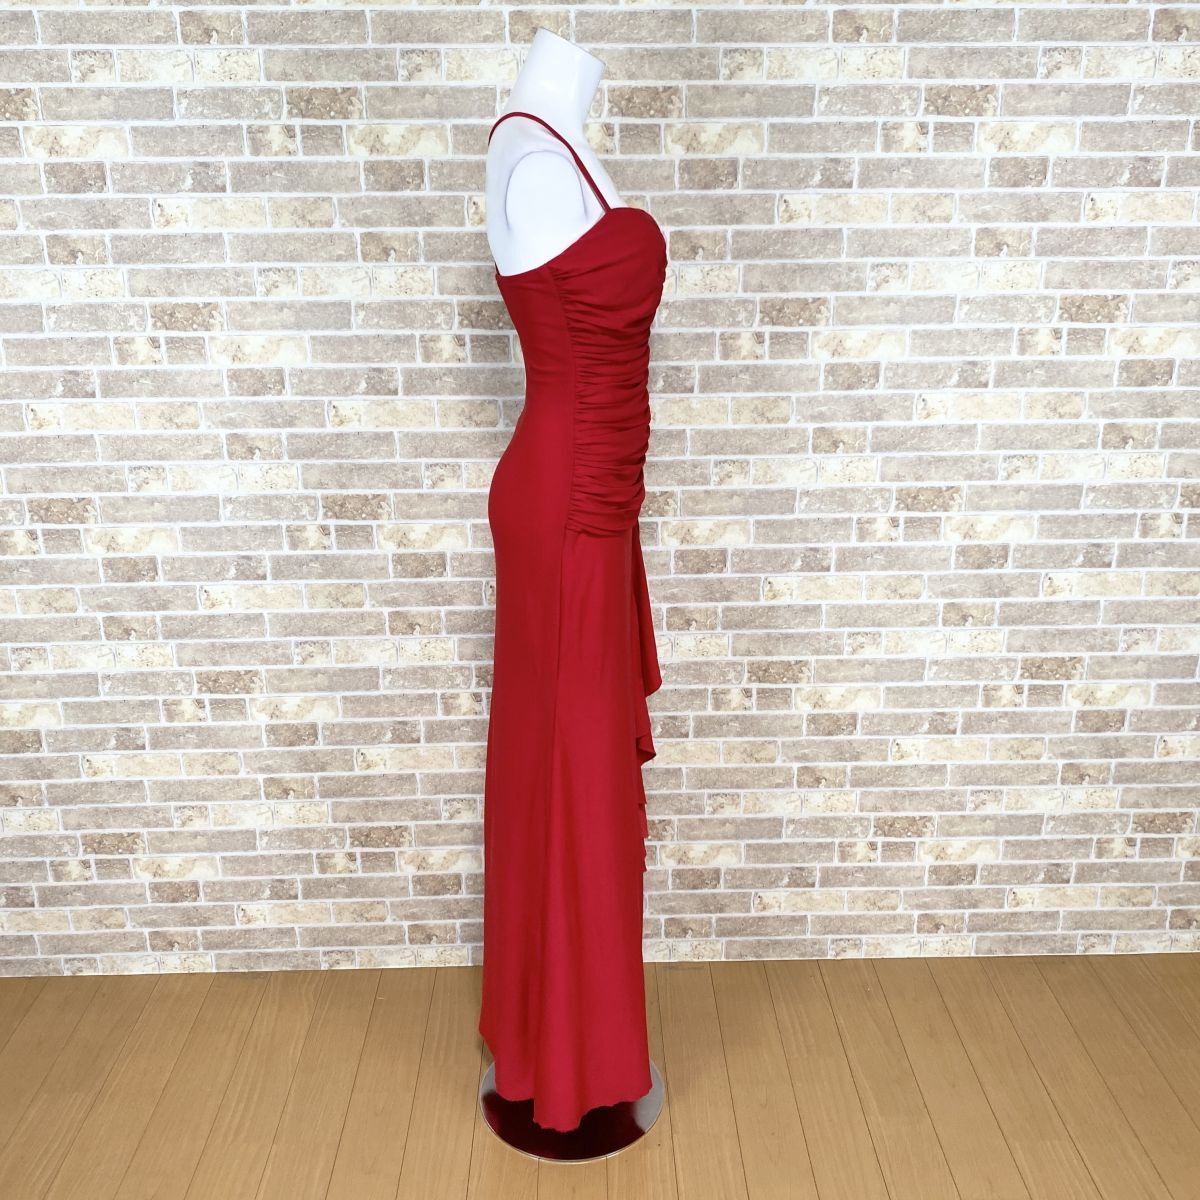 1 jpy dress escape long One-piece red color dress kyabadore presentation Event used 4848